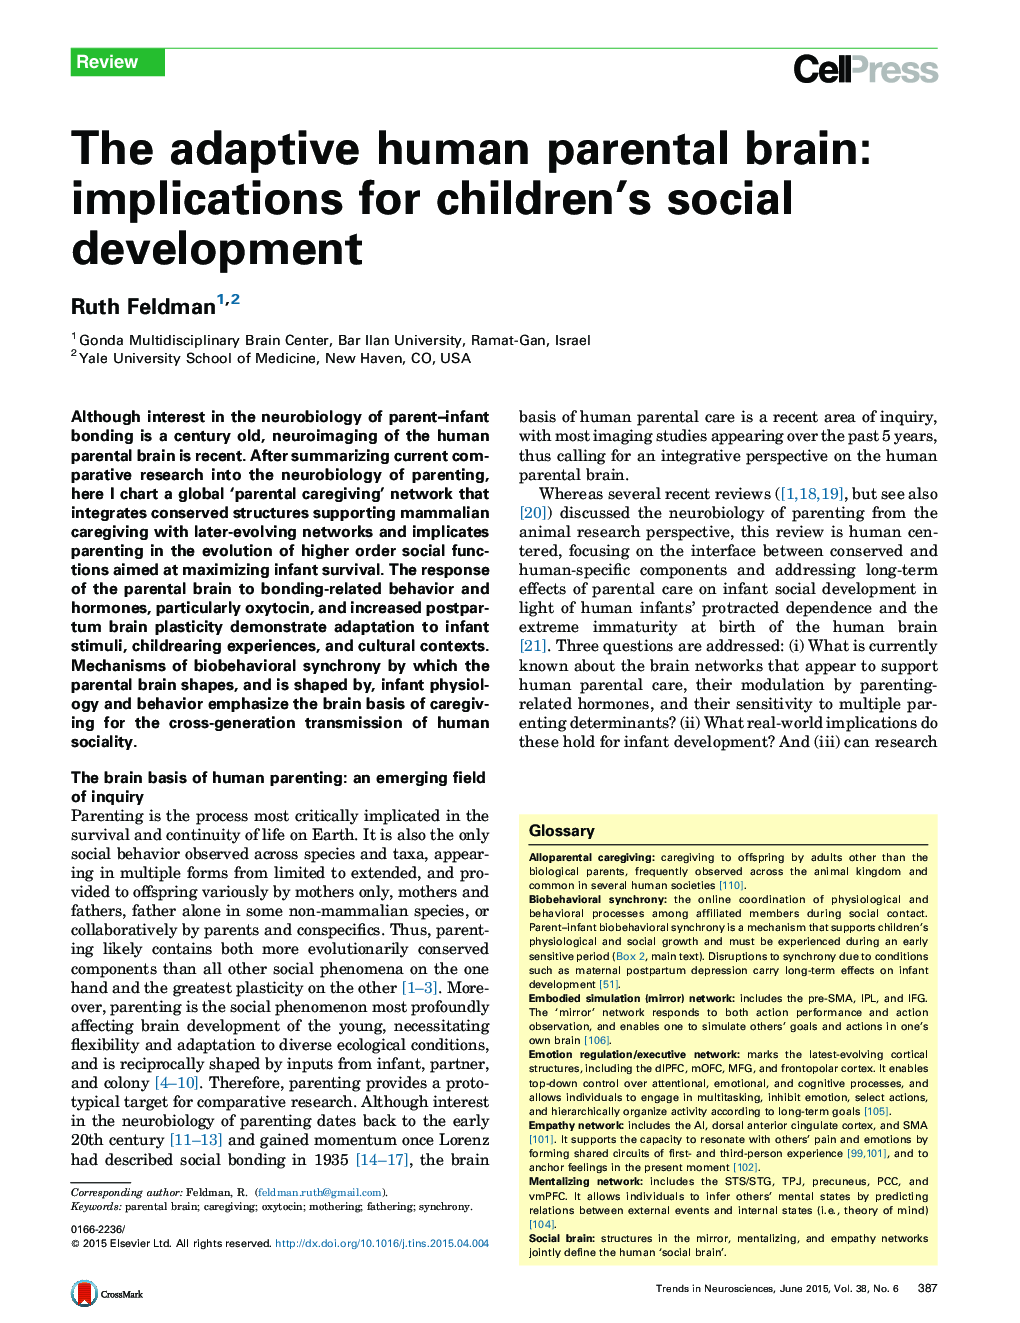 The adaptive human parental brain: implications for children's social development